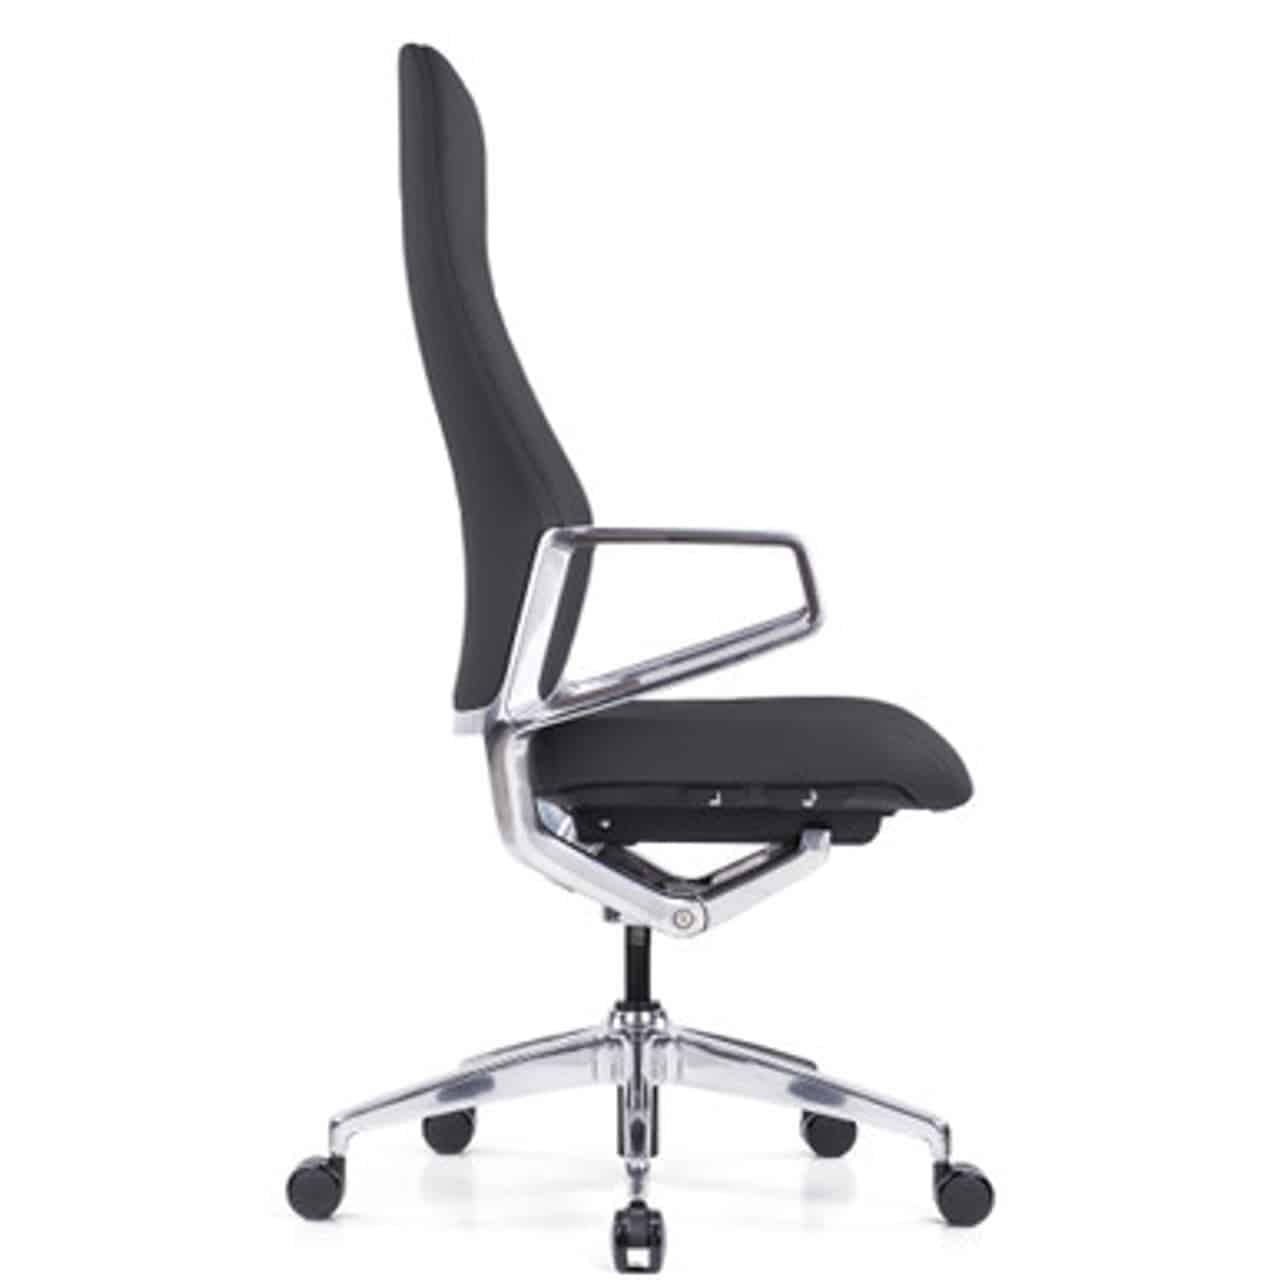 black veneto office chair high back modern, side view